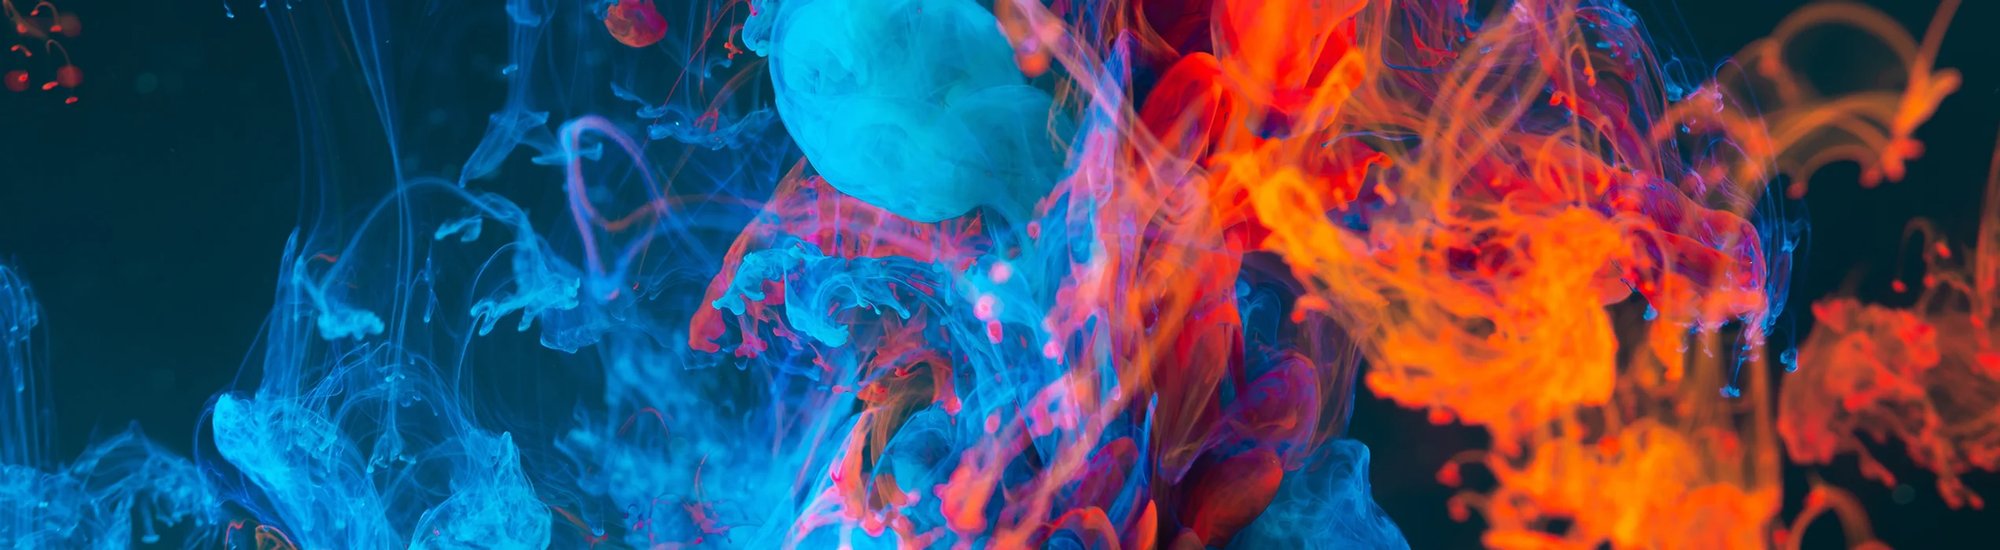 Colour splash smoke effect background